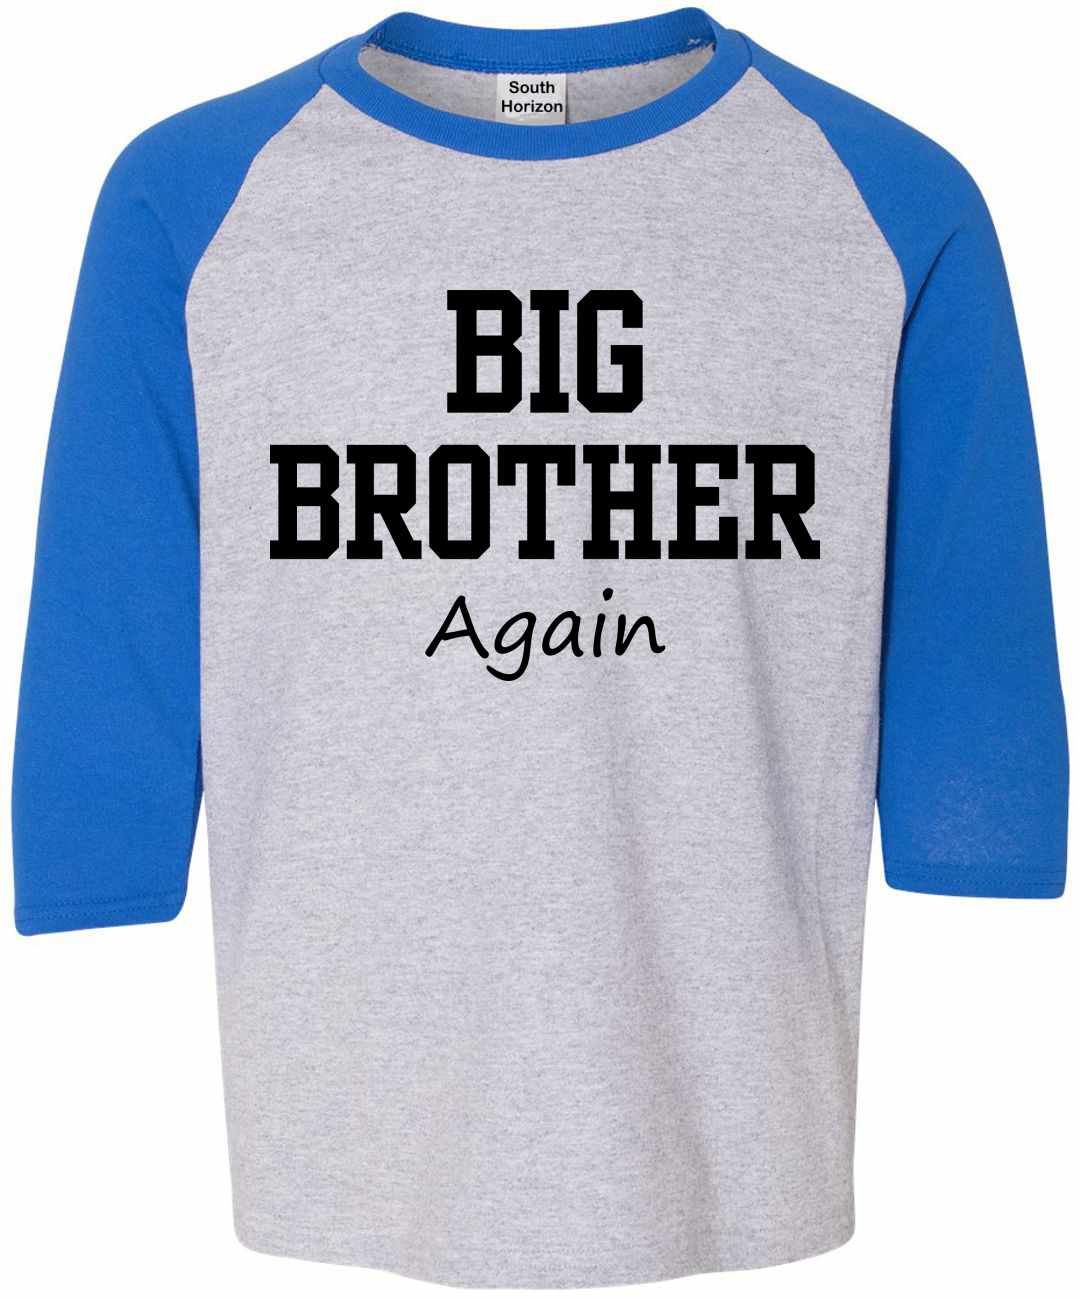 Big Brother Again on Youth Baseball Shirt